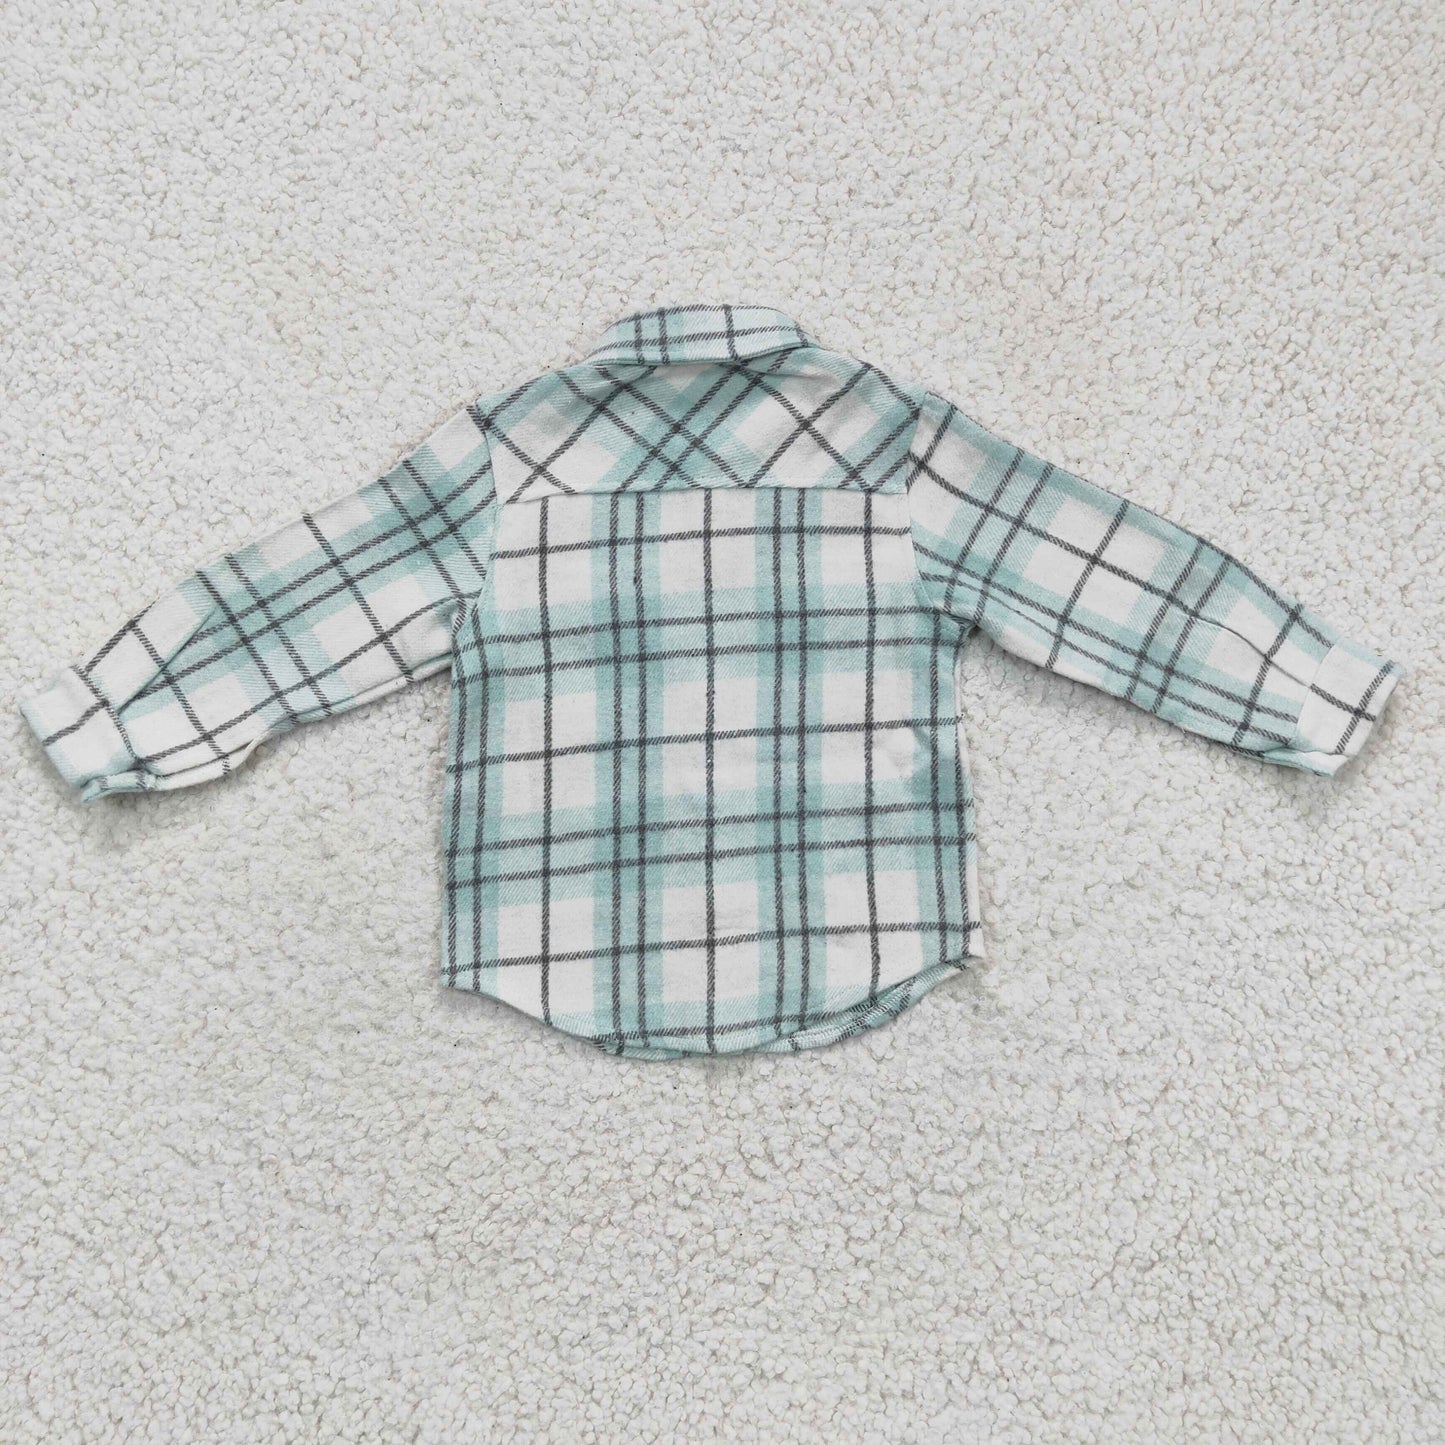 BT0169 baby boy clothes green winter shirt coat